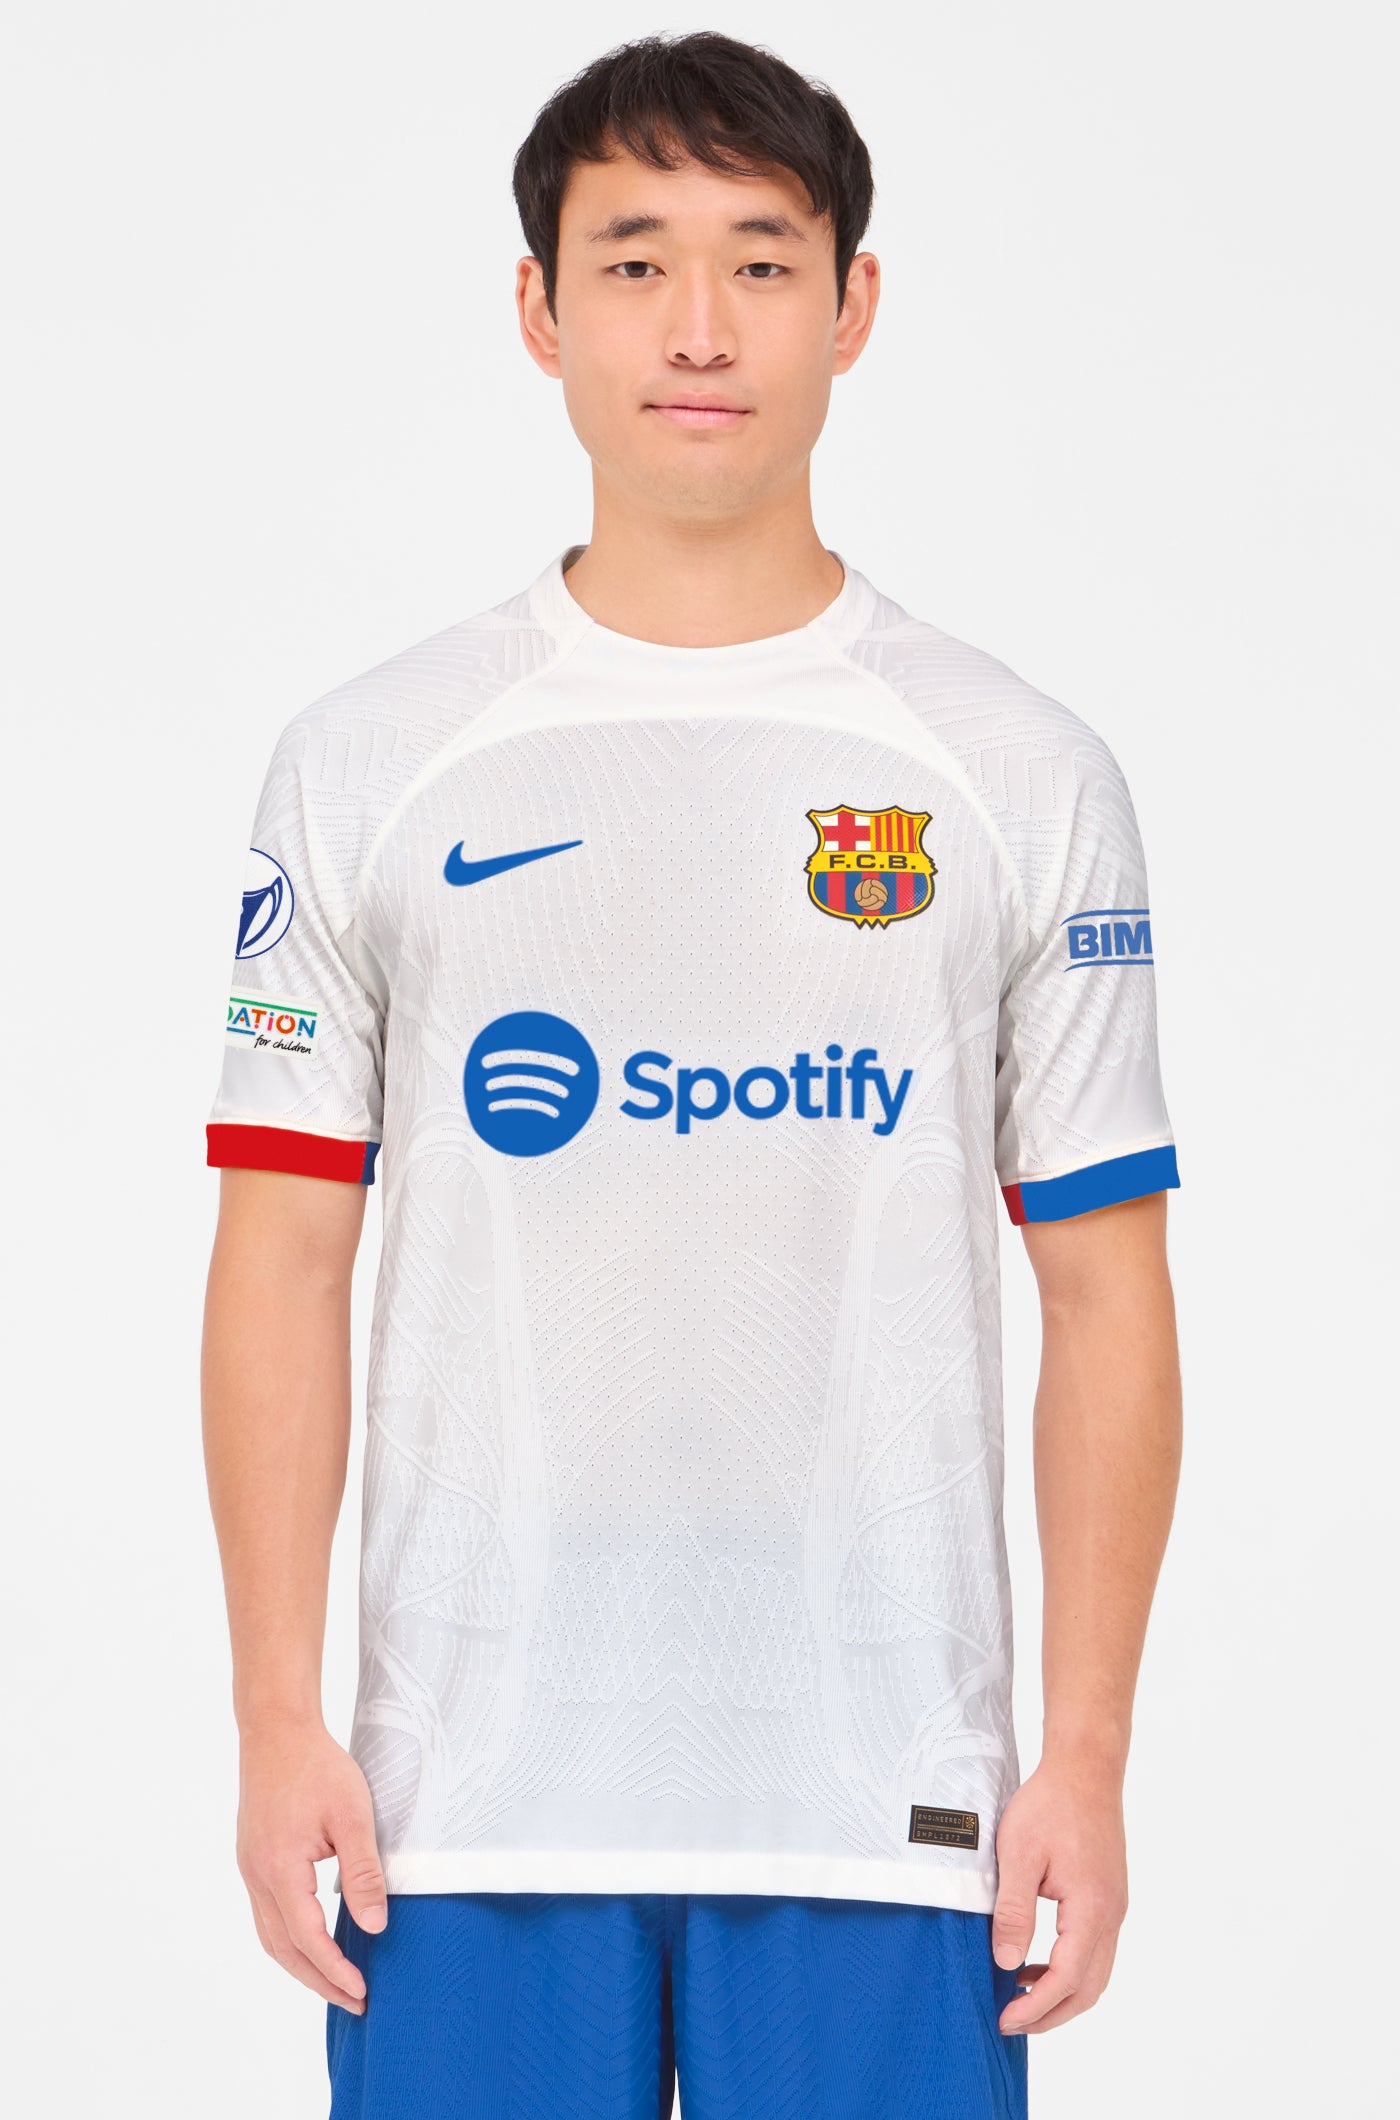 UWCL FC Barcelona away shirt 23/24 Player's Edition - PATRI